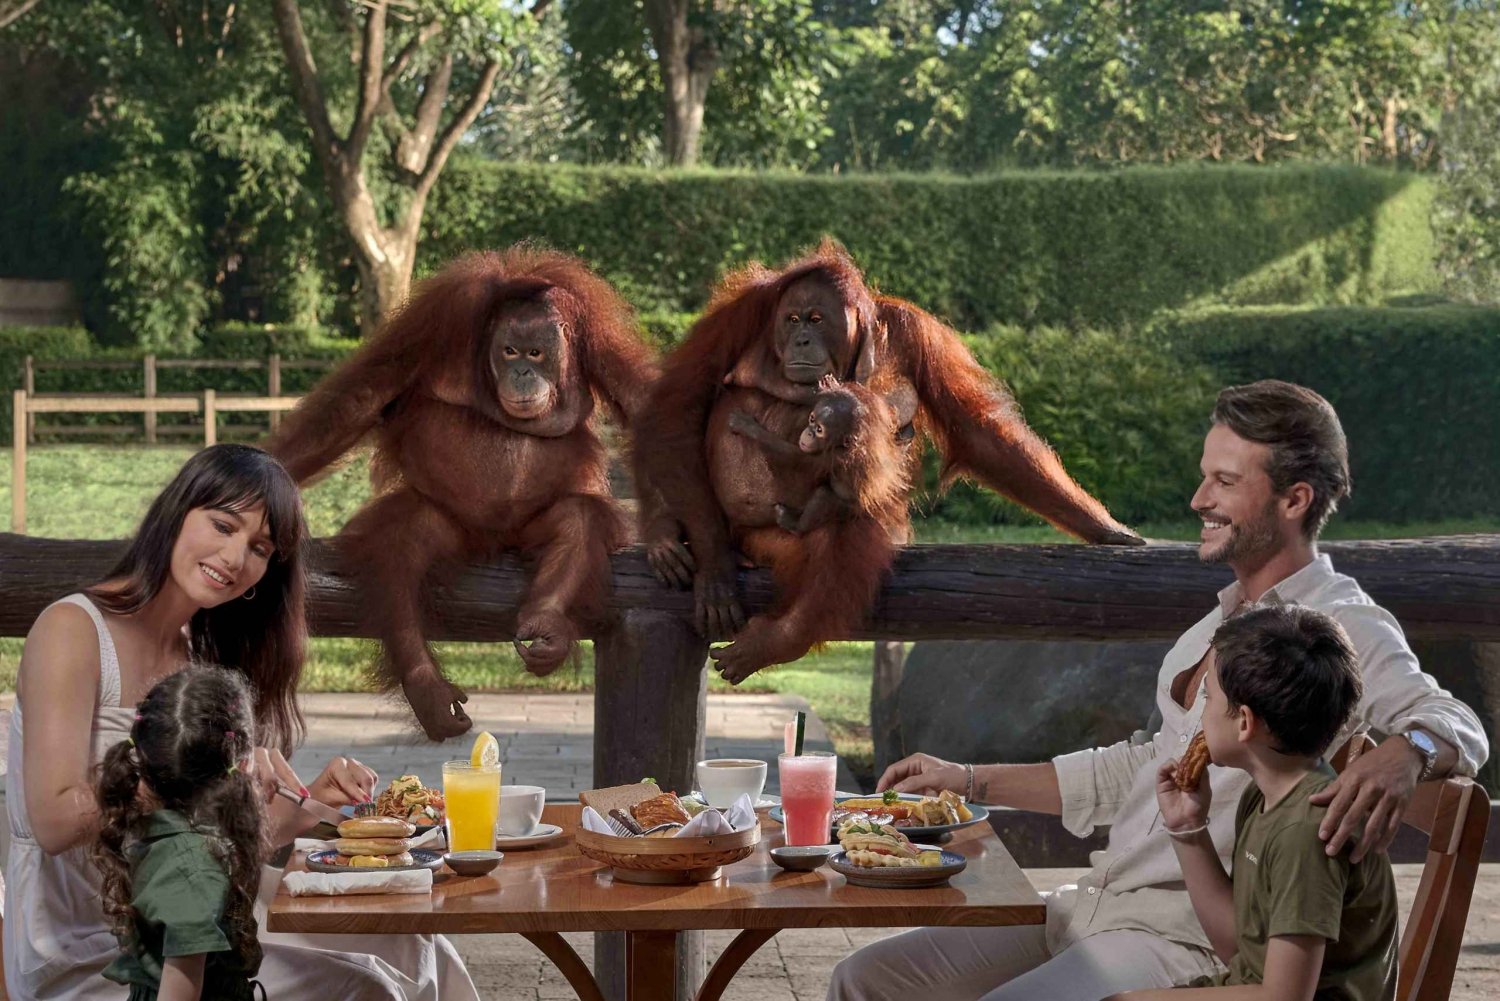 Bali Zoo: Breakfast with the Orangutans